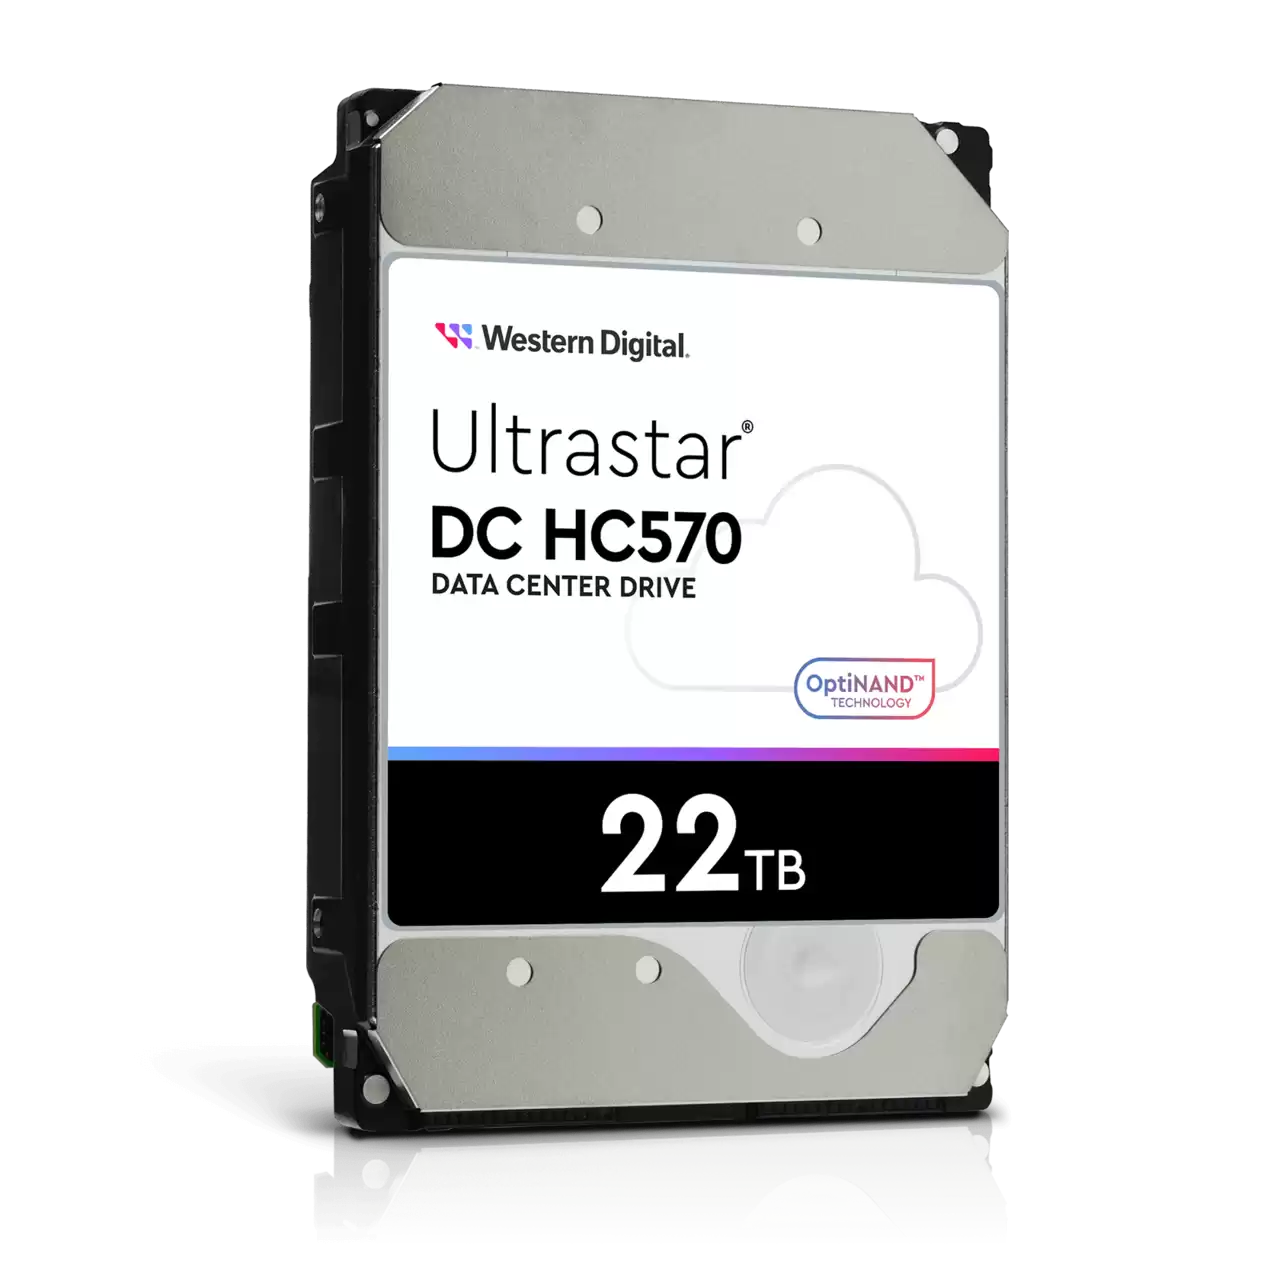 Хард диск WD Ultrastar DC HC570, 22TB, 7200RPM, SATA 6GB/s - WUH722222ALE6L4-2